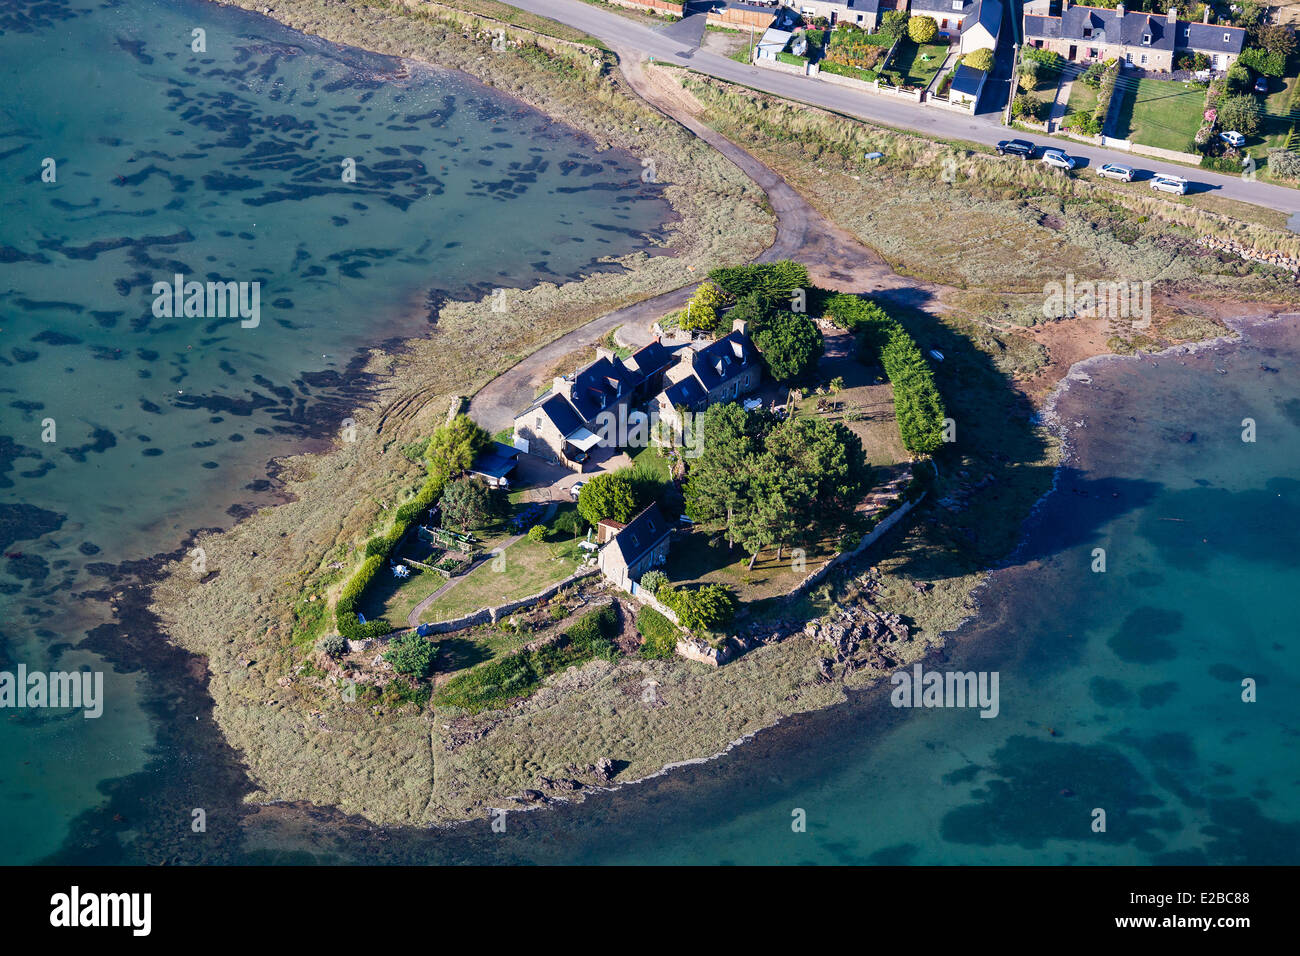 France, Cotes d'Armor, Pleubian, small island (aerial view) Stock Photo